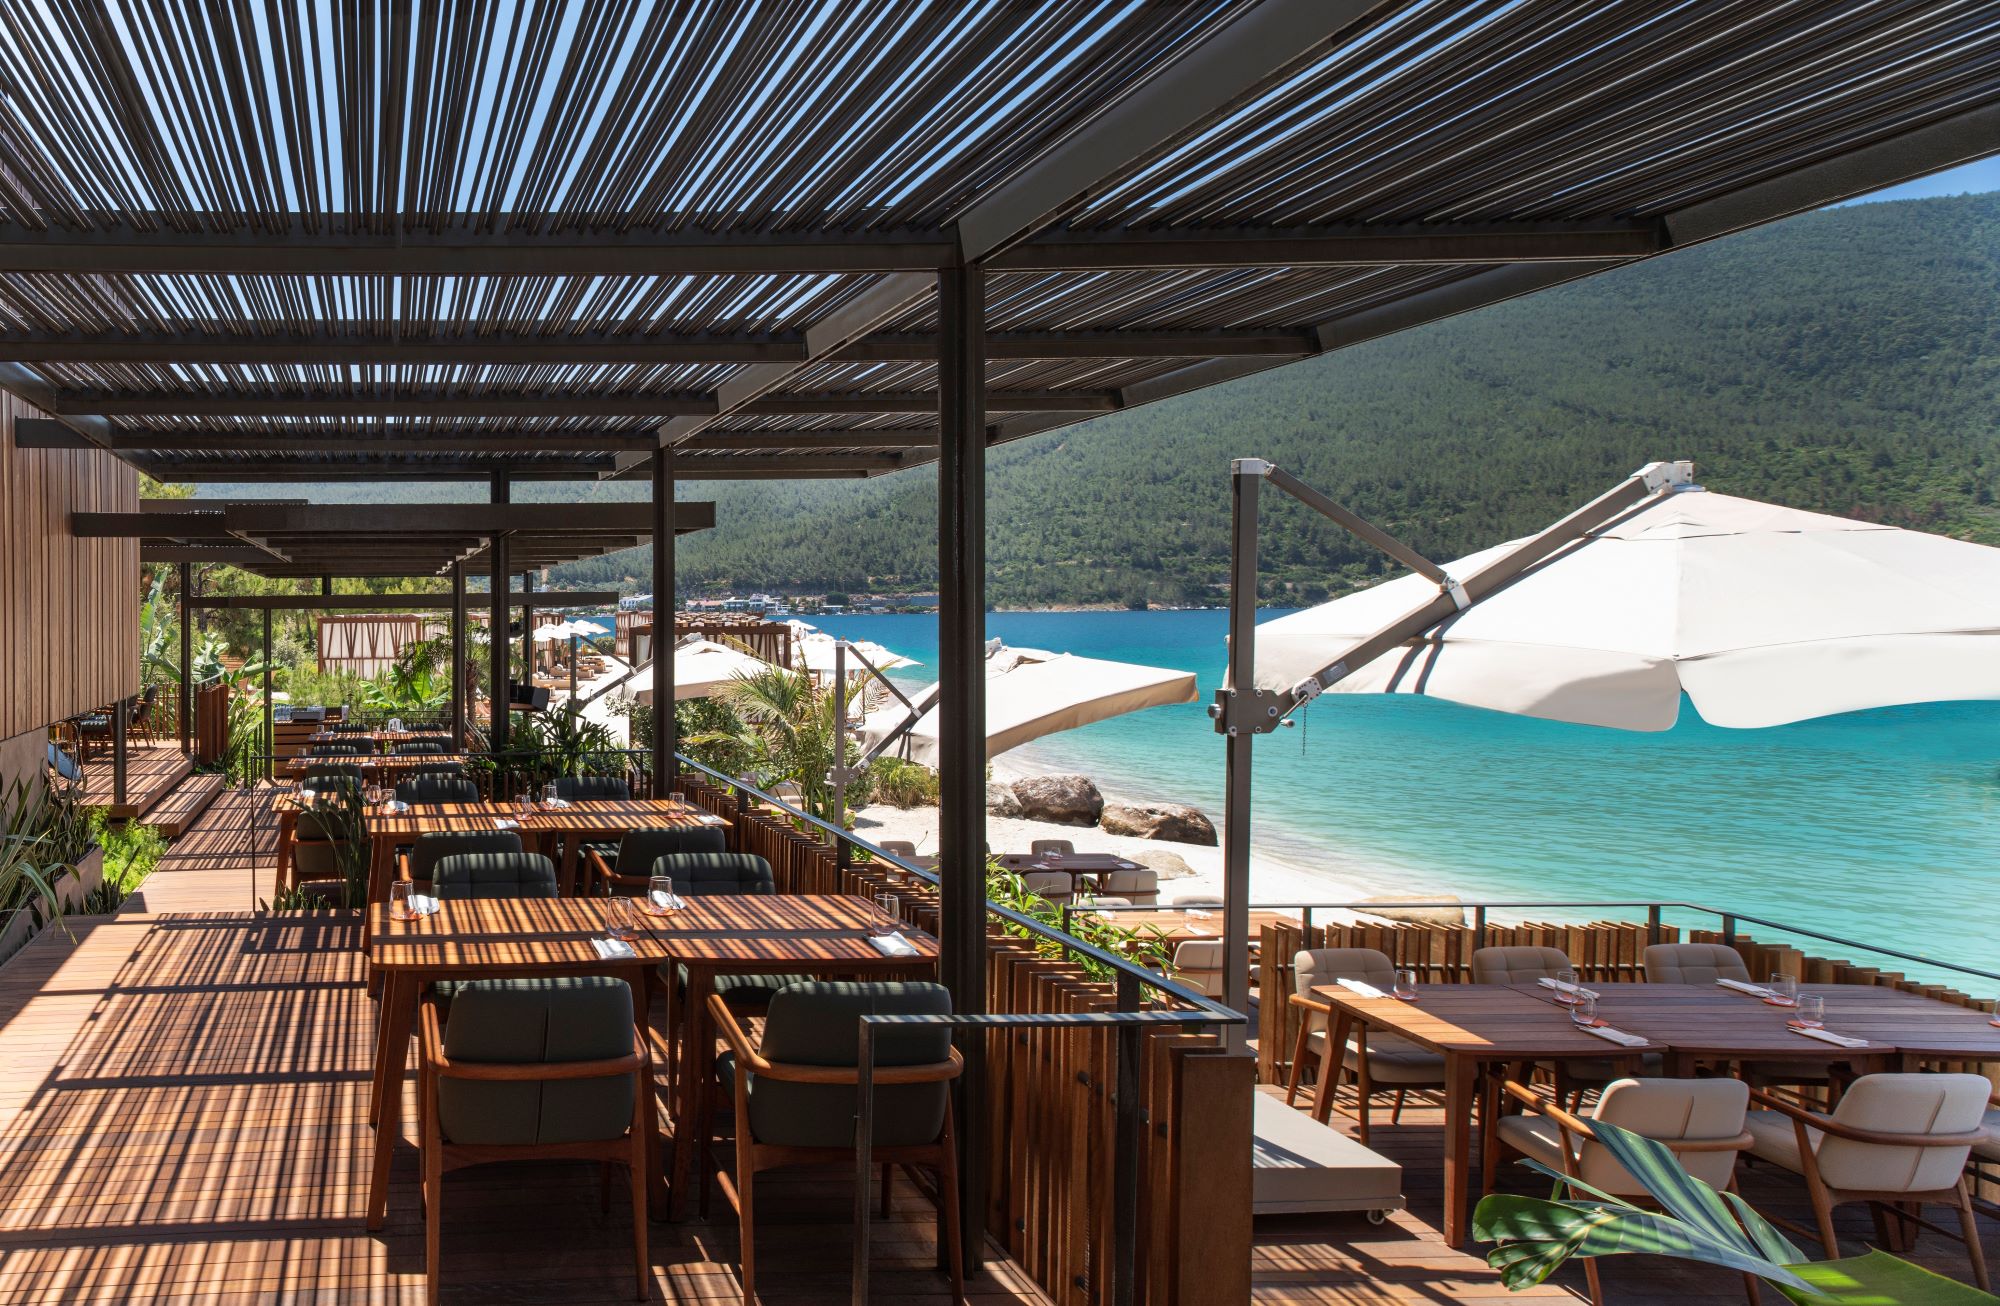 Lujo Hotel Gastronomy Gaia and stunning sea views